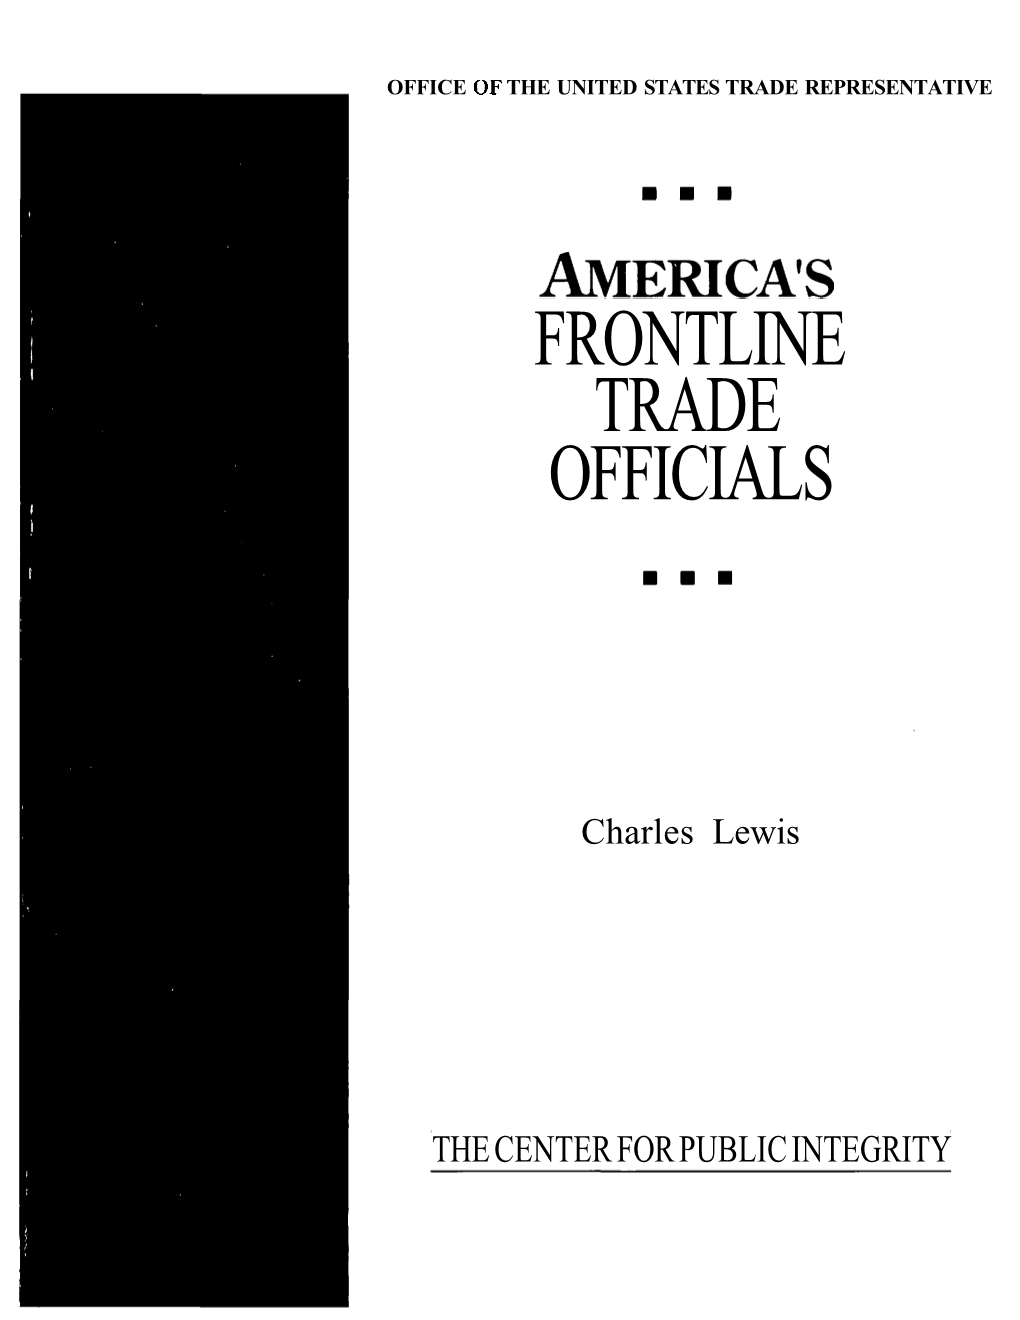 America's Frontline Trade Officials